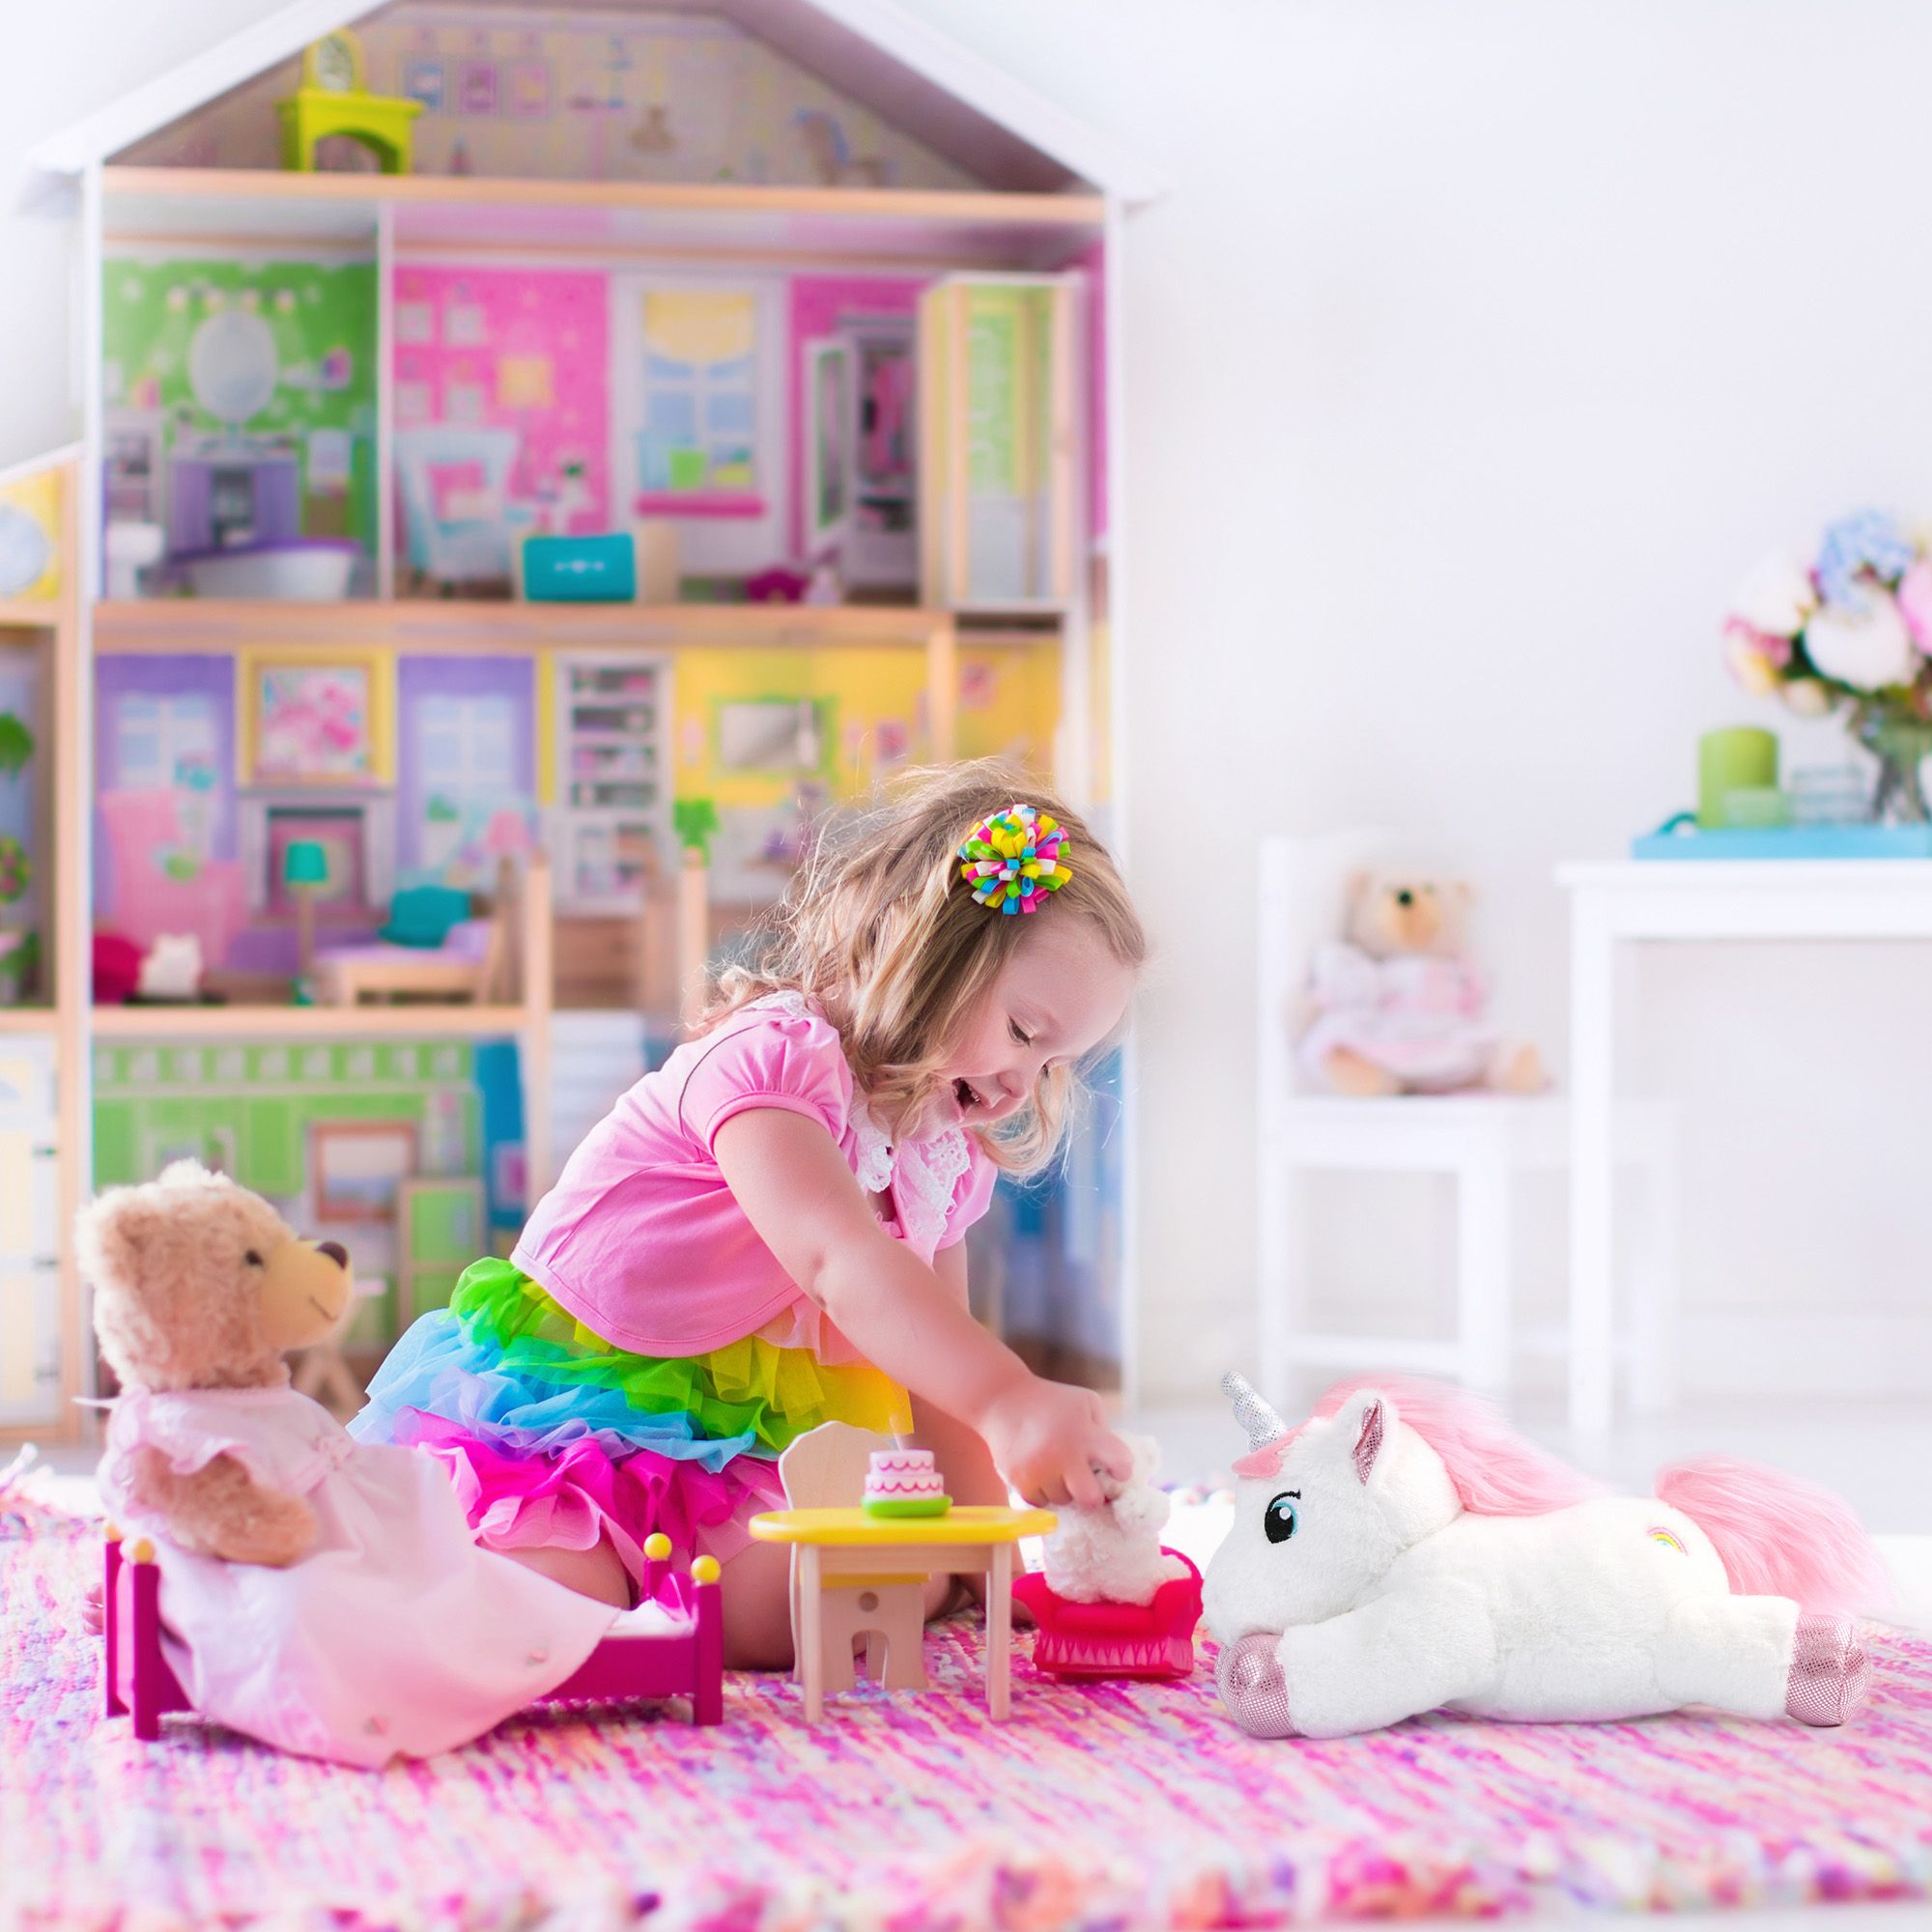 LotFancy 2 Pcs 12" Unicorn Stuffed Animal Plush Toys Gifts for Kids, Girls, Purple and White - image 2 of 9